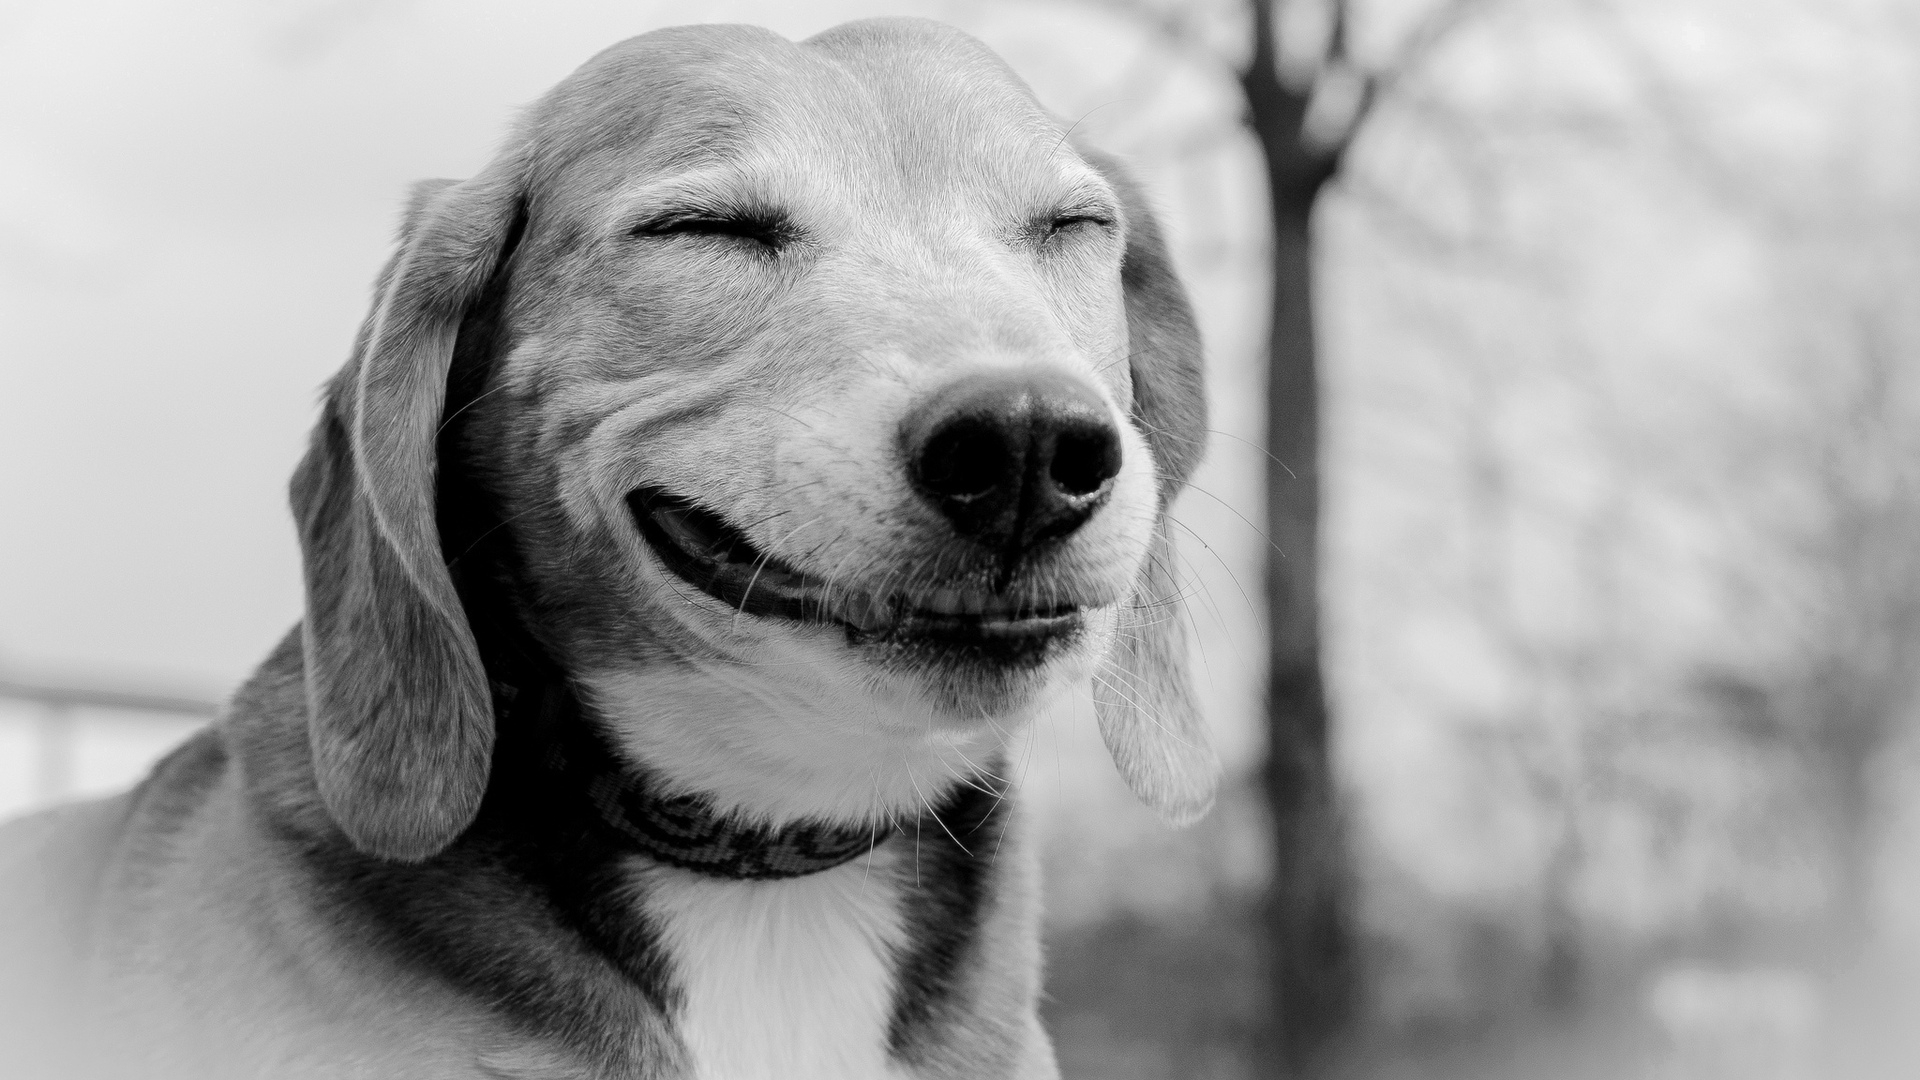 Smiling Dog for 1920 x 1080 HDTV 1080p resolution